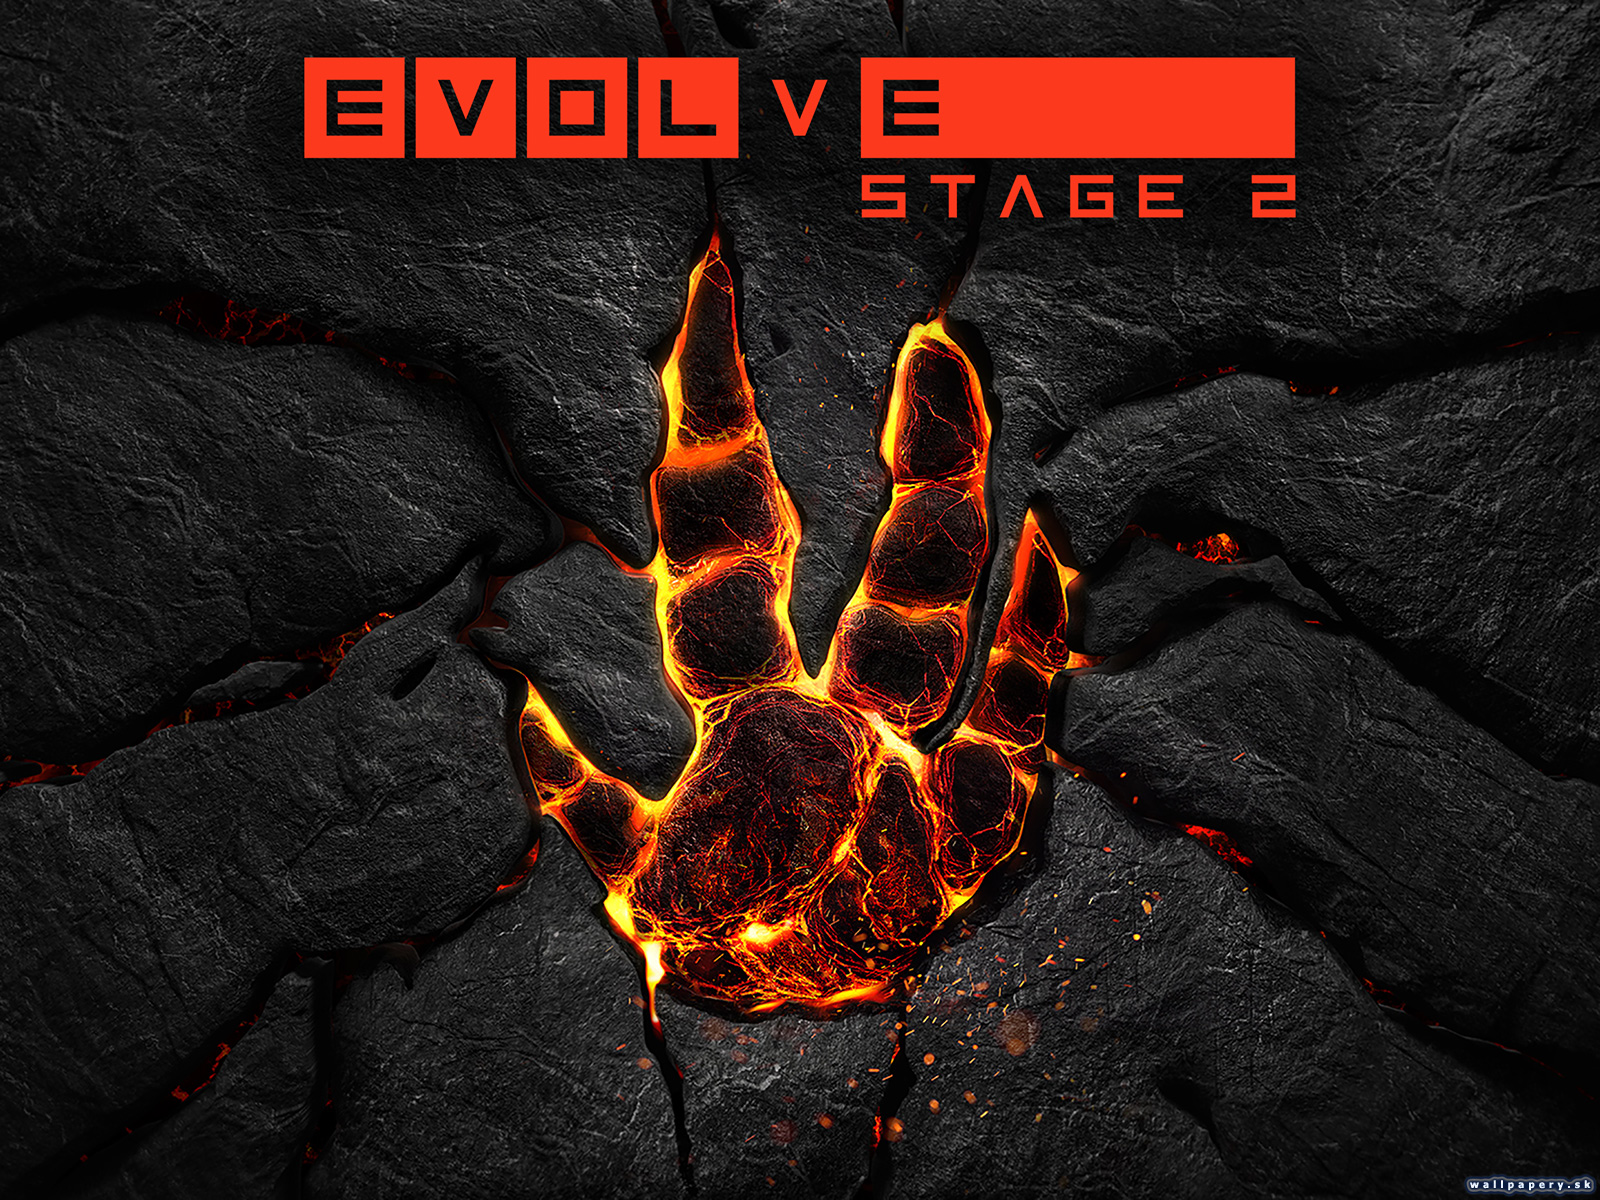 Evolve Stage 2 - wallpaper 2